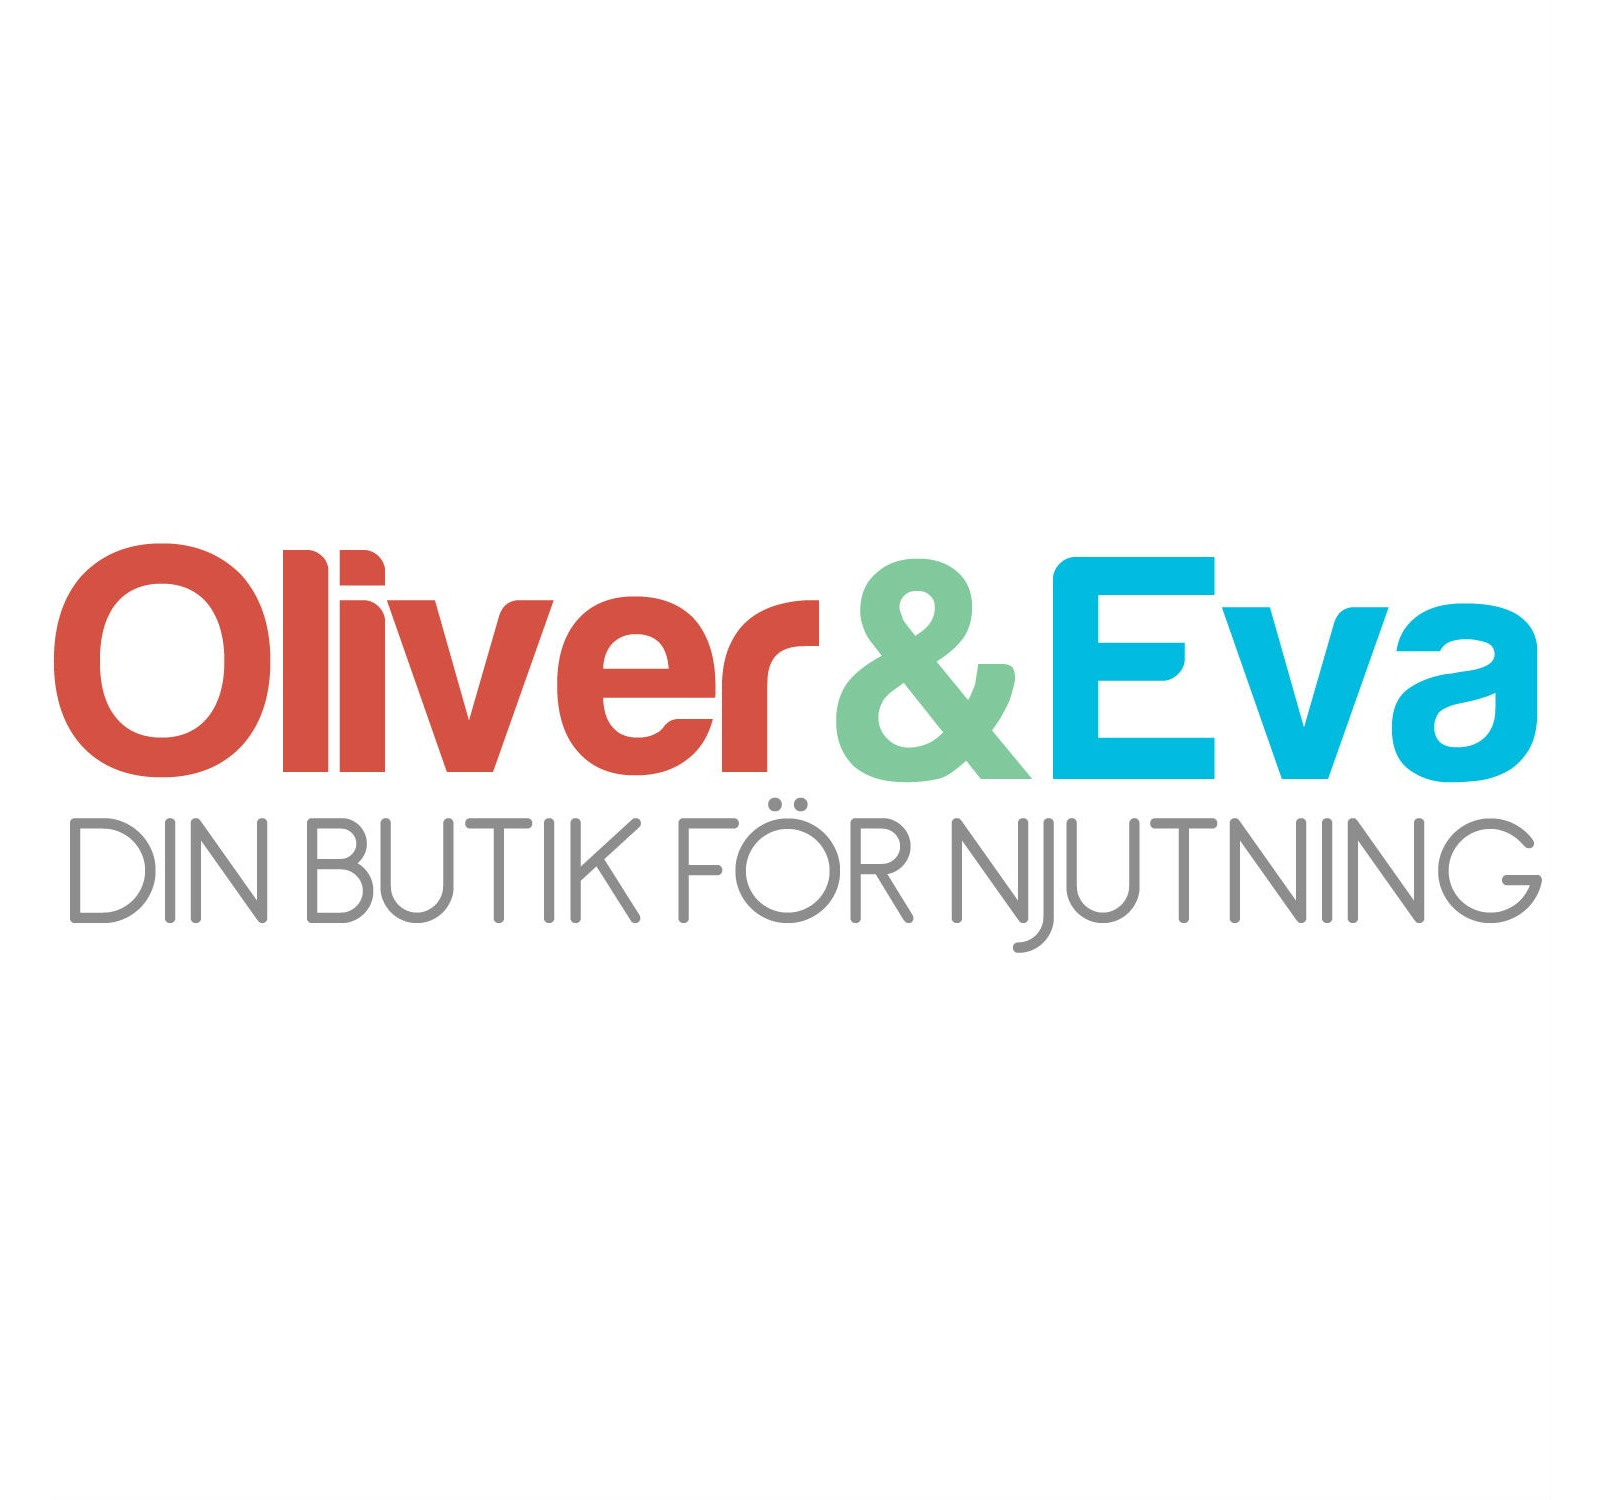 Oliver & Eva logo